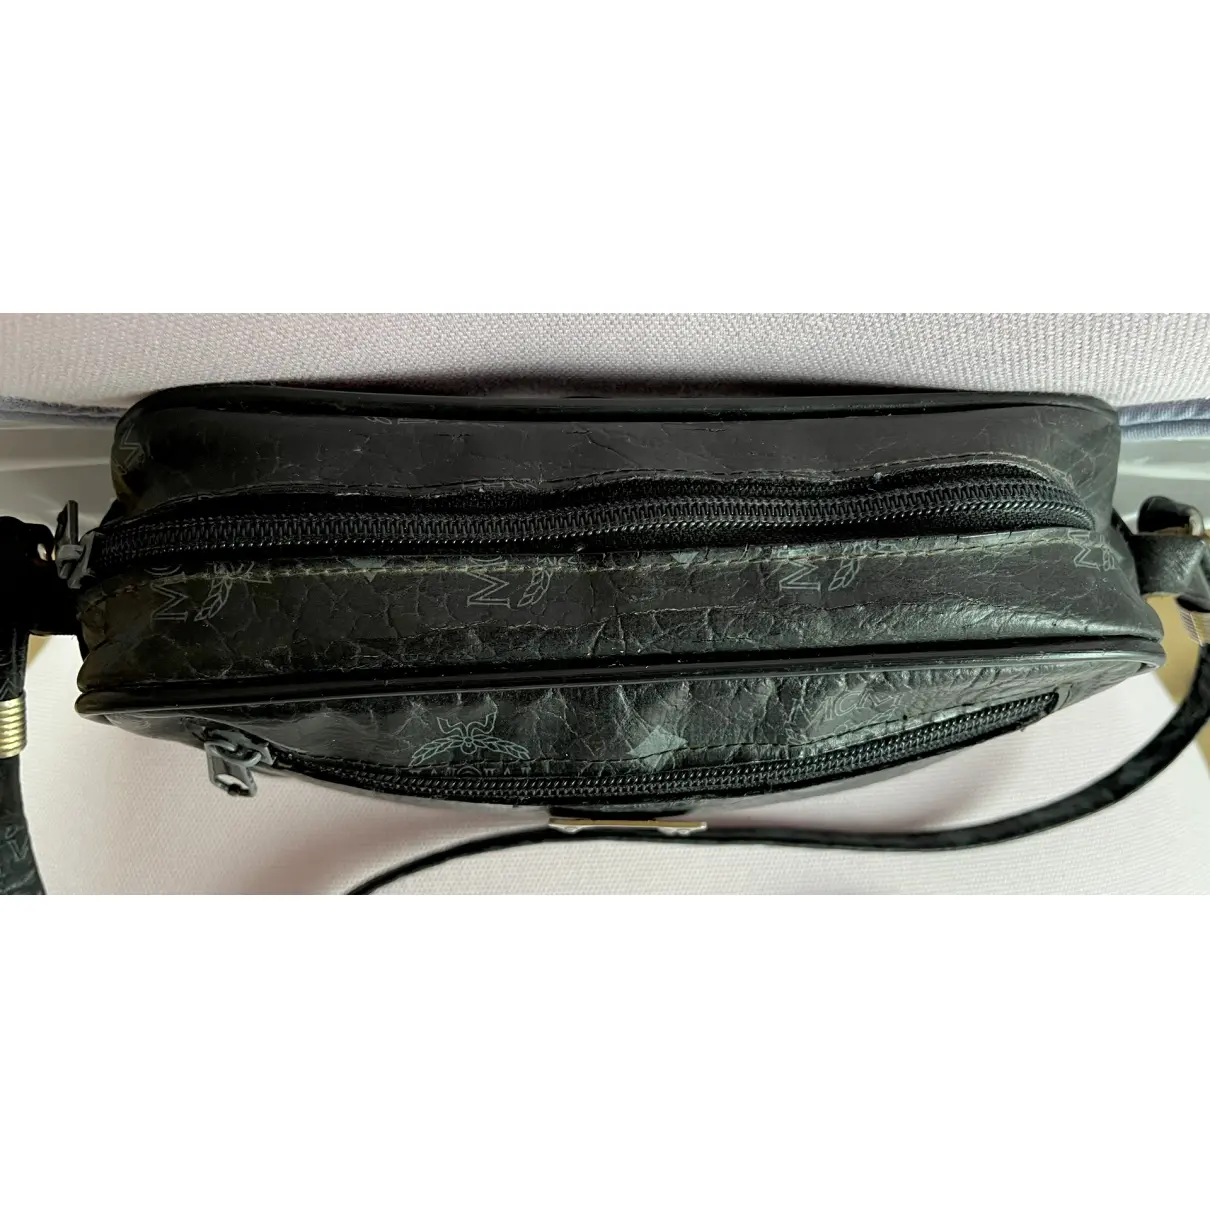 Leather handbag MCM